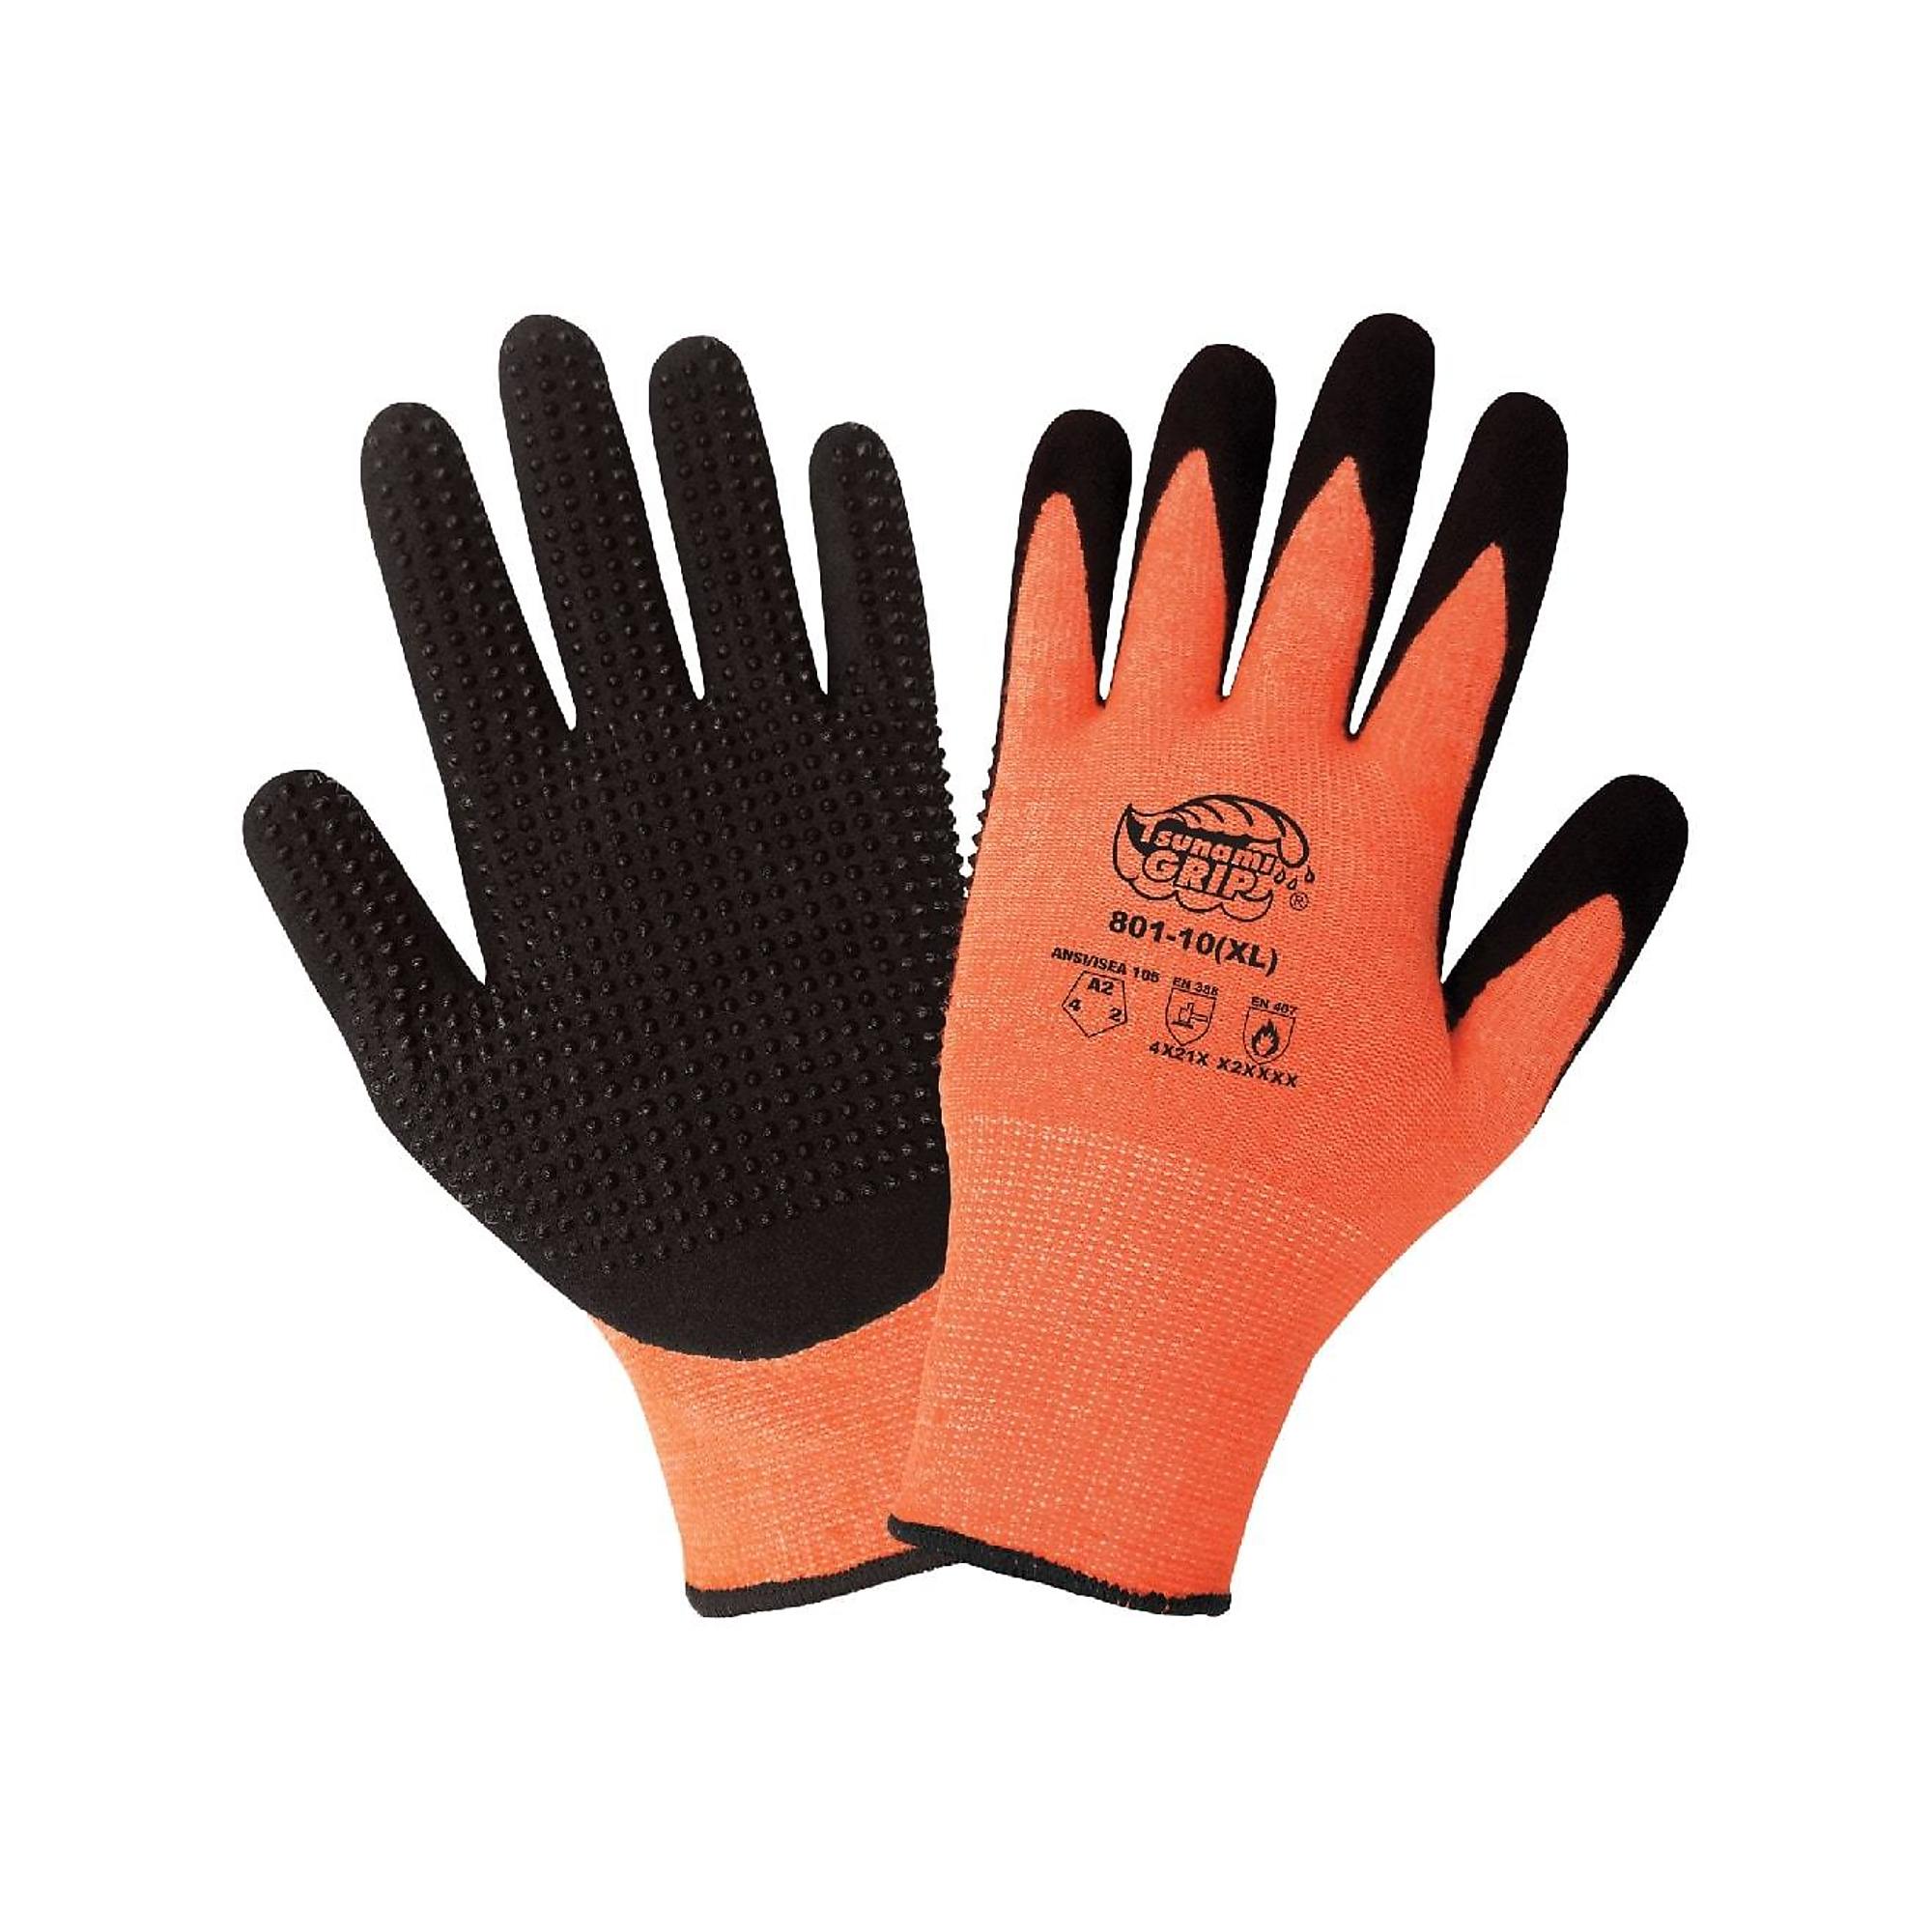 Global Glove Tsunami Grip , Orange, Heat Resist, Dotted, Cut Resist A2 Gloves - 12 Pairs, Size L, Color Orange/Black, Included (qty.) 12 Model 801-9(L